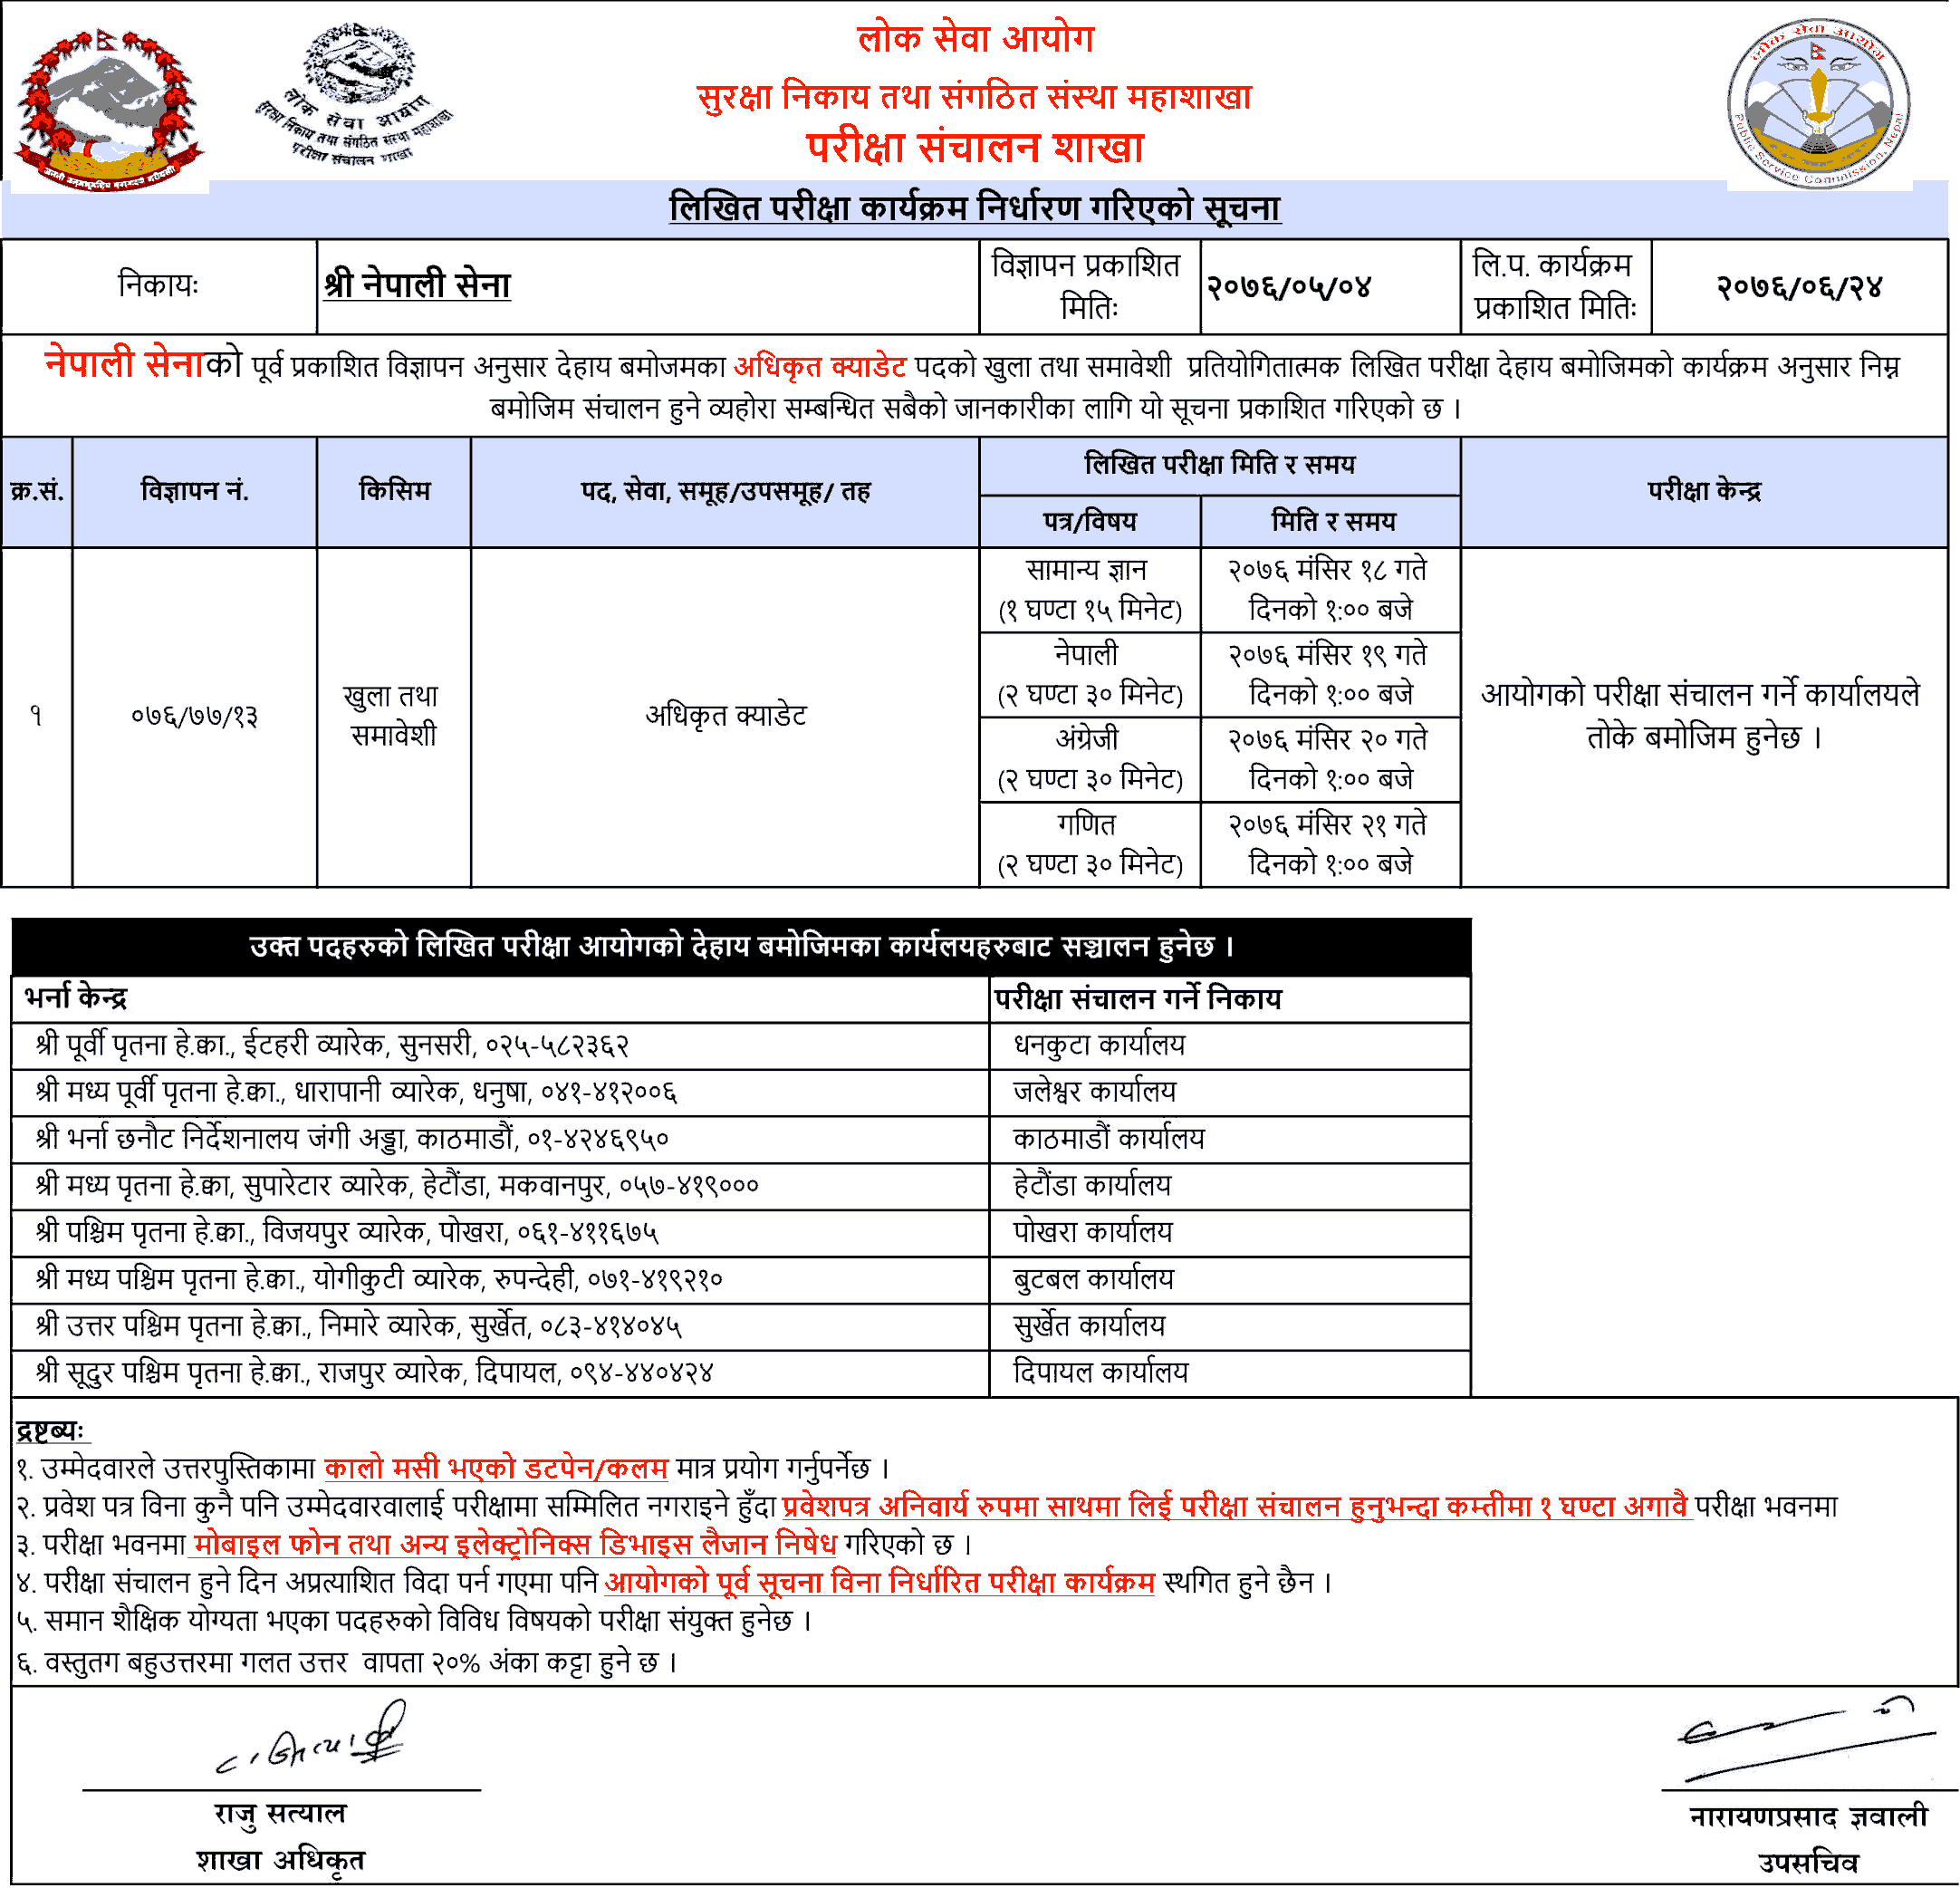 Nepali Army Officer Cadate Exam Scheduling 2076